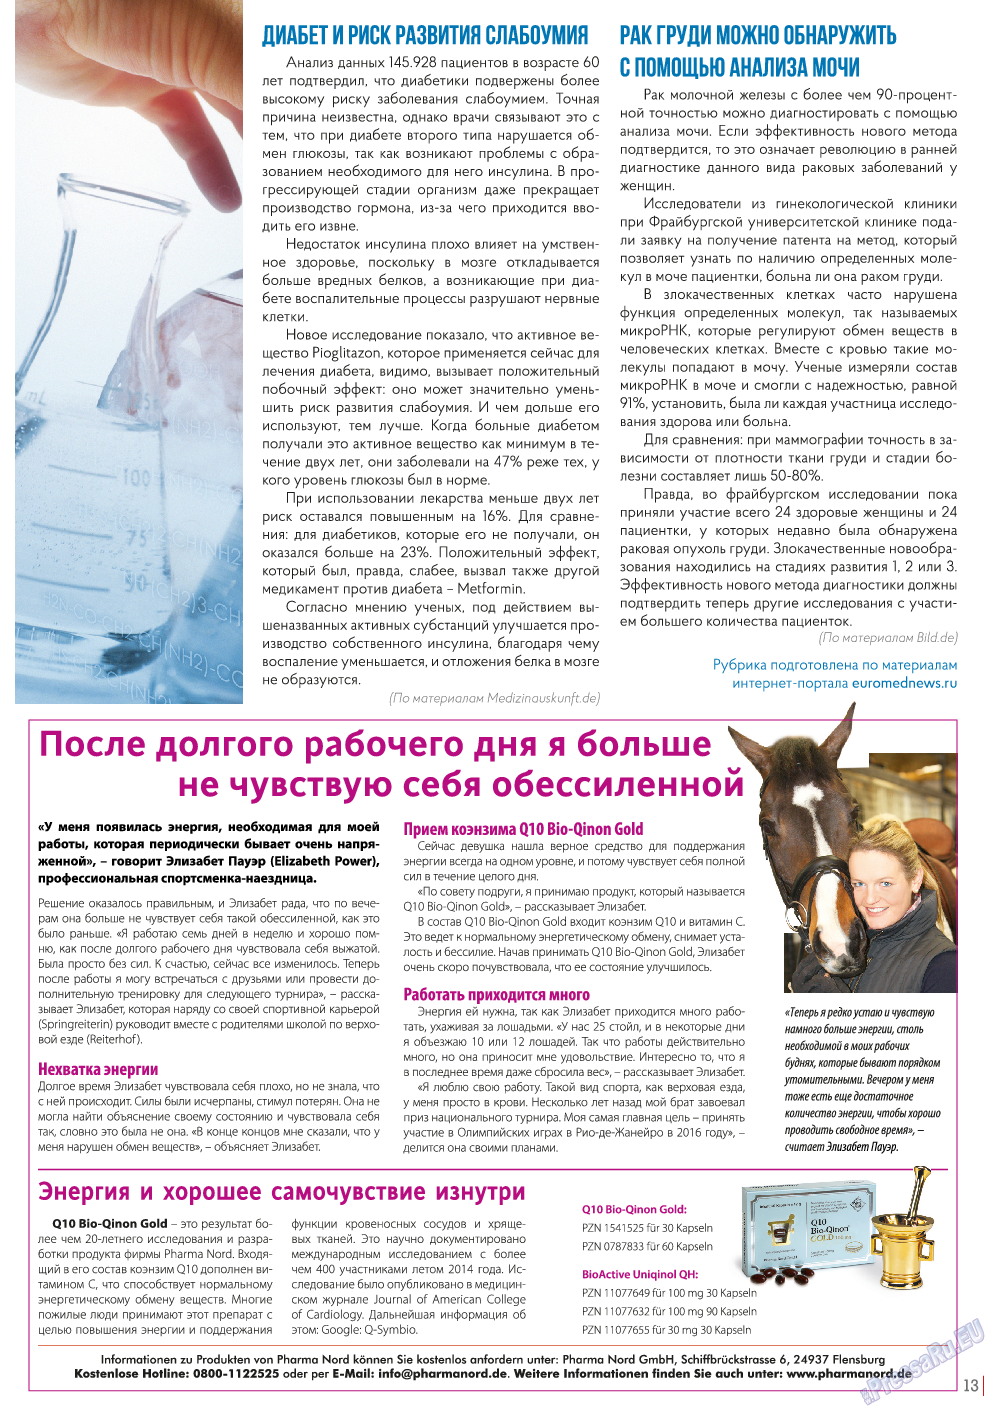 Катюша, журнал. 2015 №45 стр.13